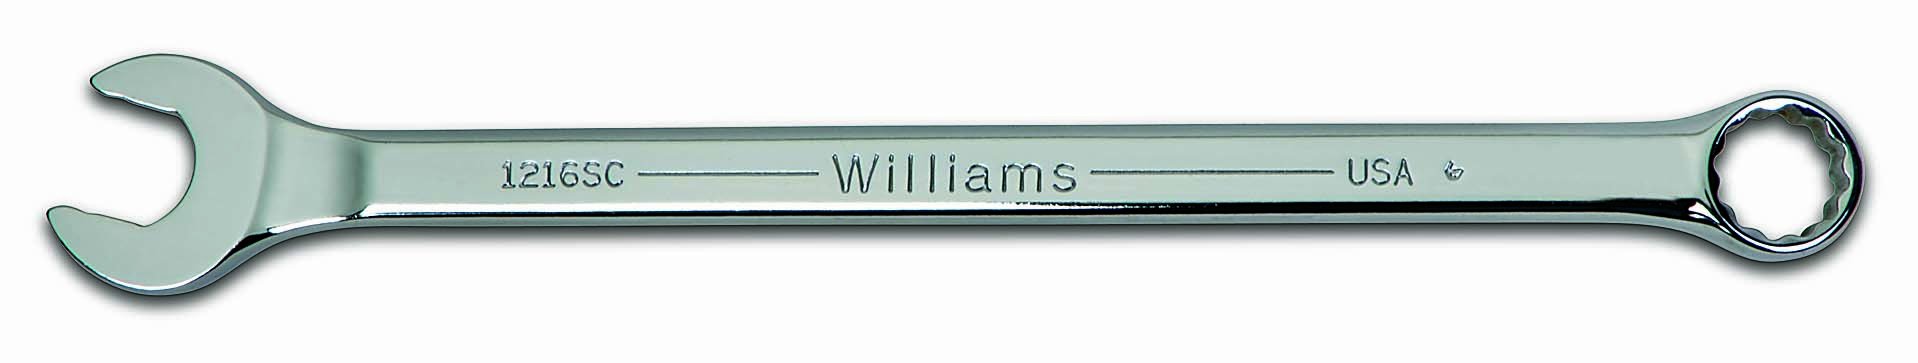 Williams 1234SC Super Combo Combination Wrench 1-116-Inch並行輸入品